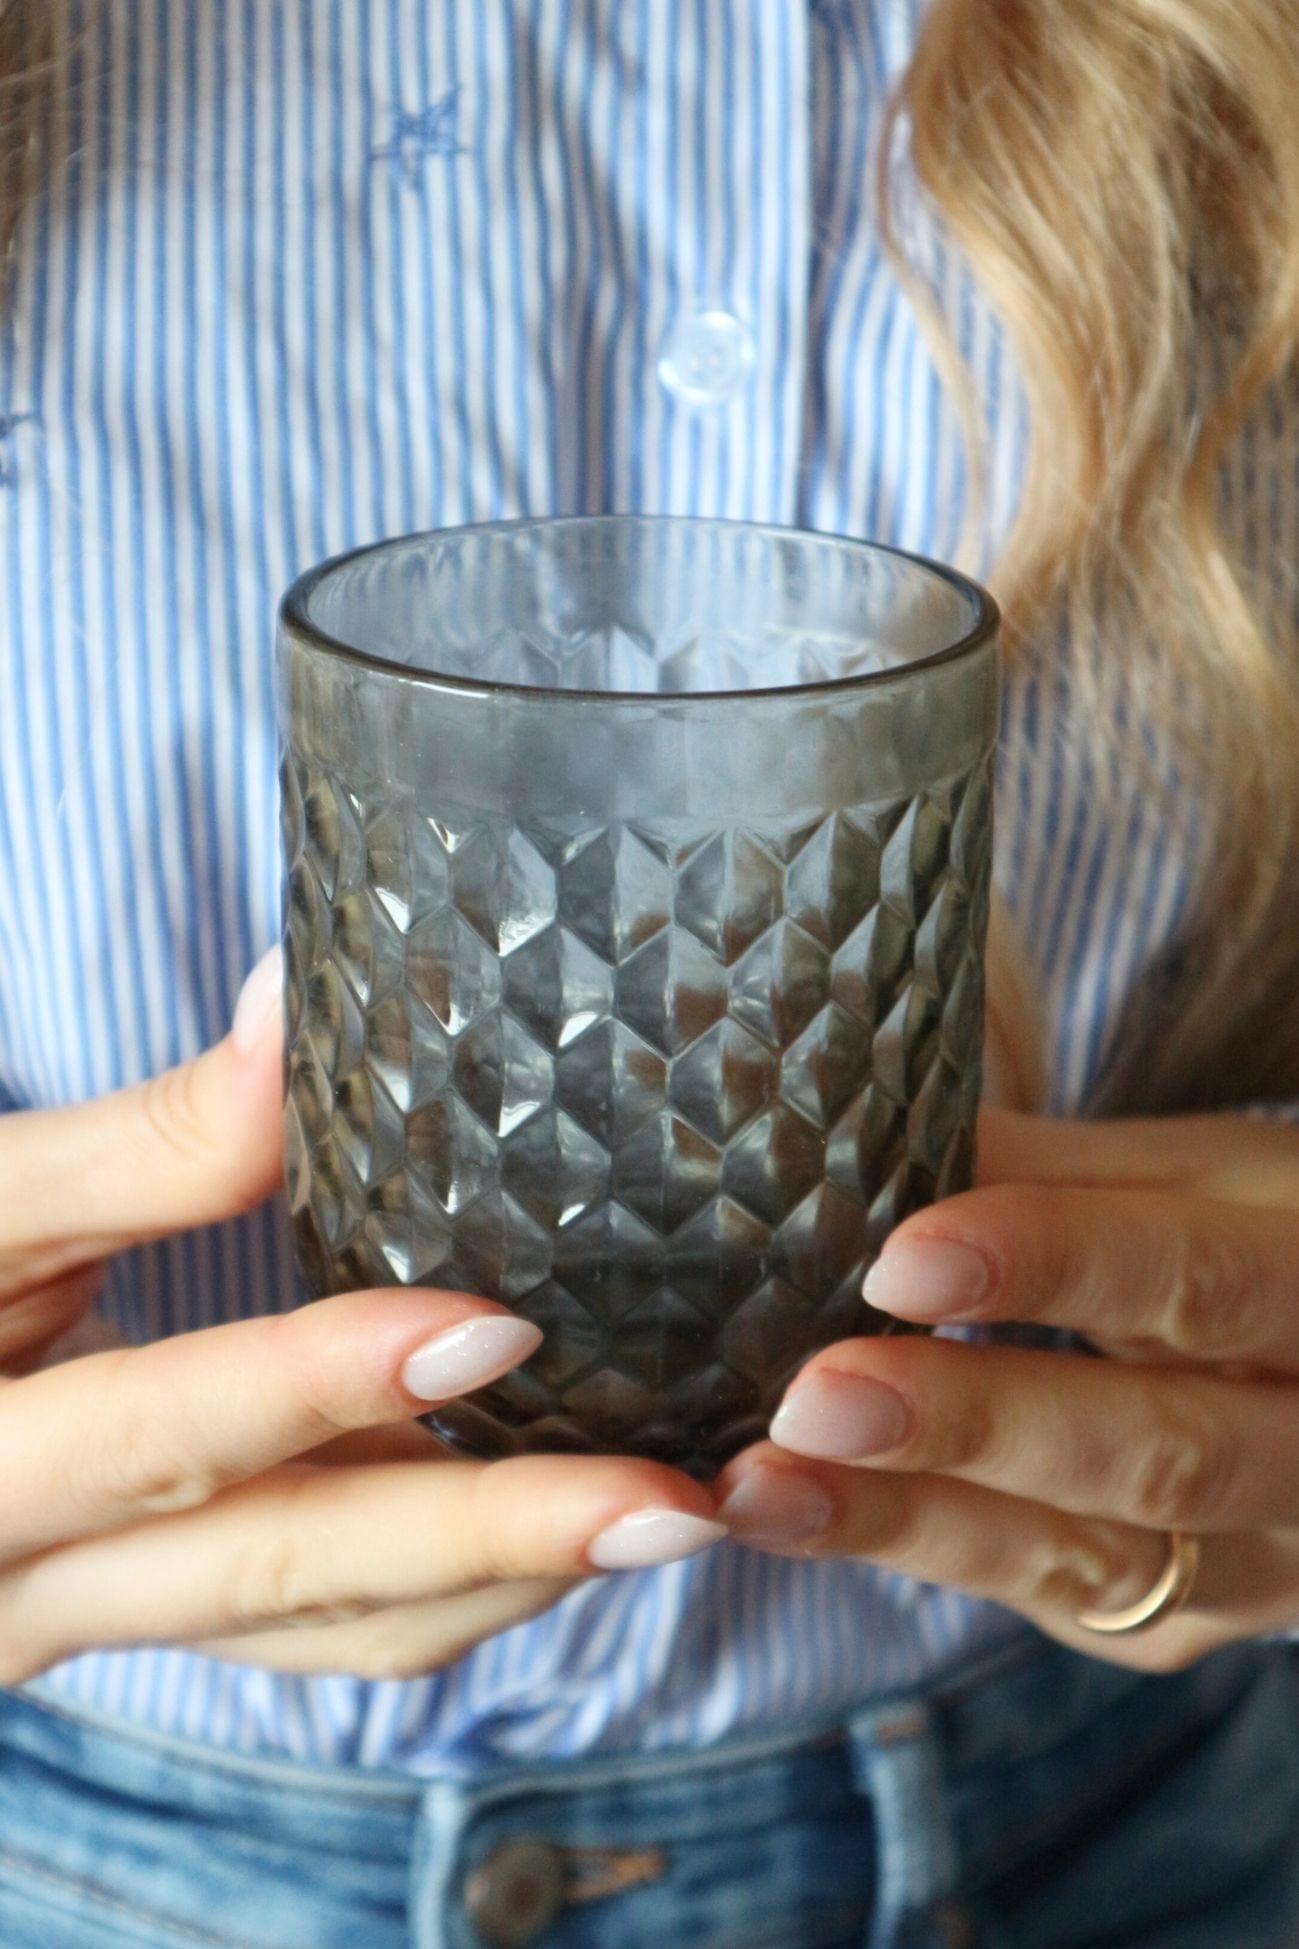 Item International Ermes Ermes - Bicchiere di vetro grigio 240ml | Item International